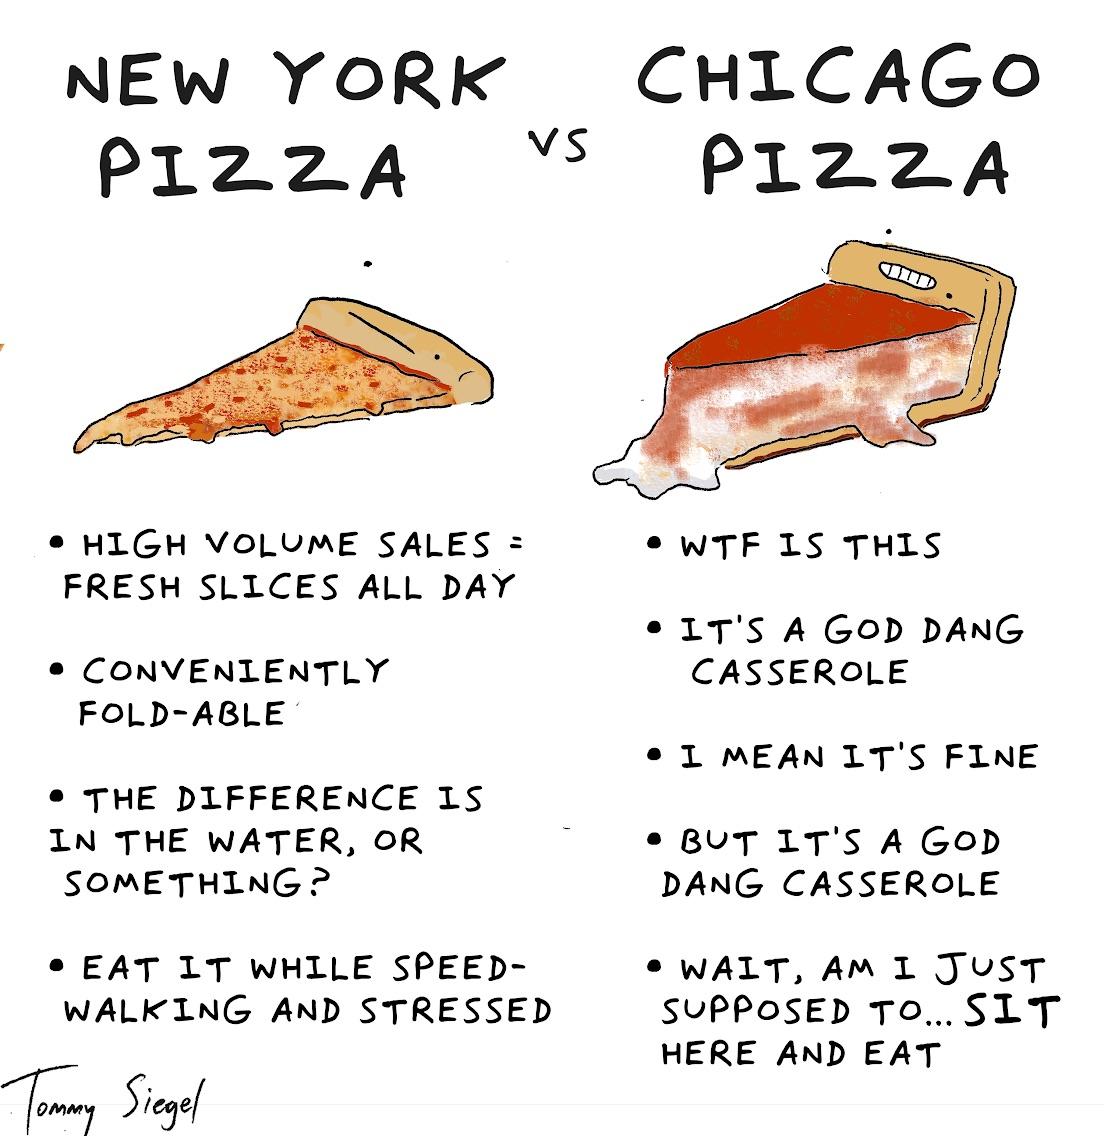 NYC vs Chicago pizza